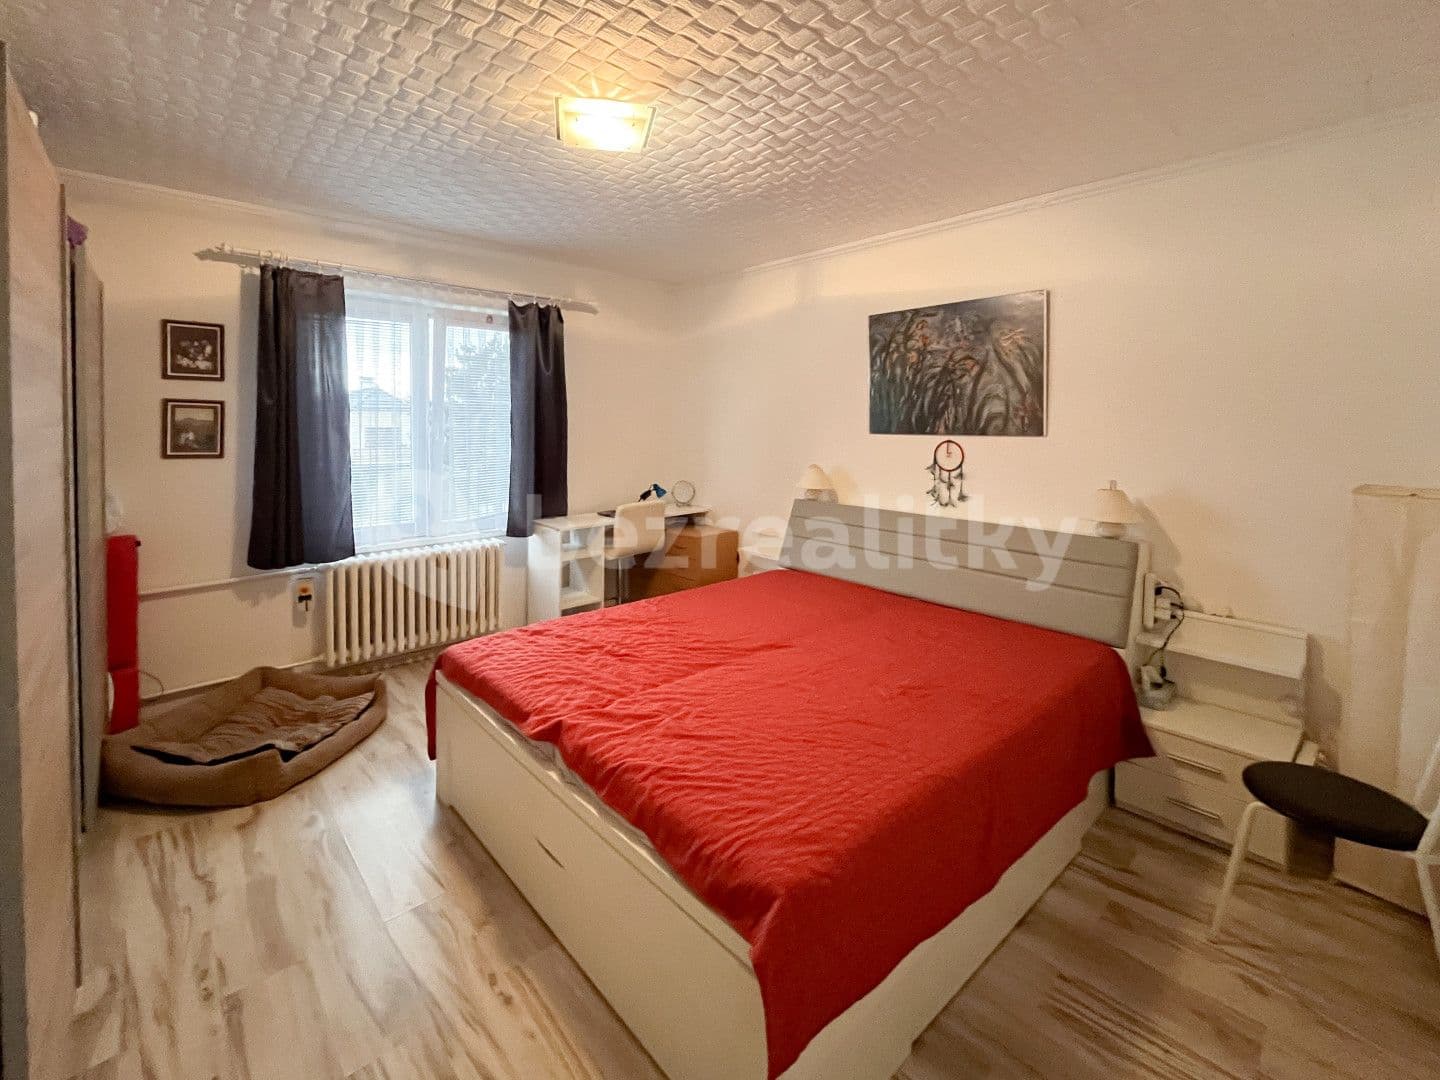 2 bedroom with open-plan kitchen flat for sale, 72 m², Koštice, Ústecký Region